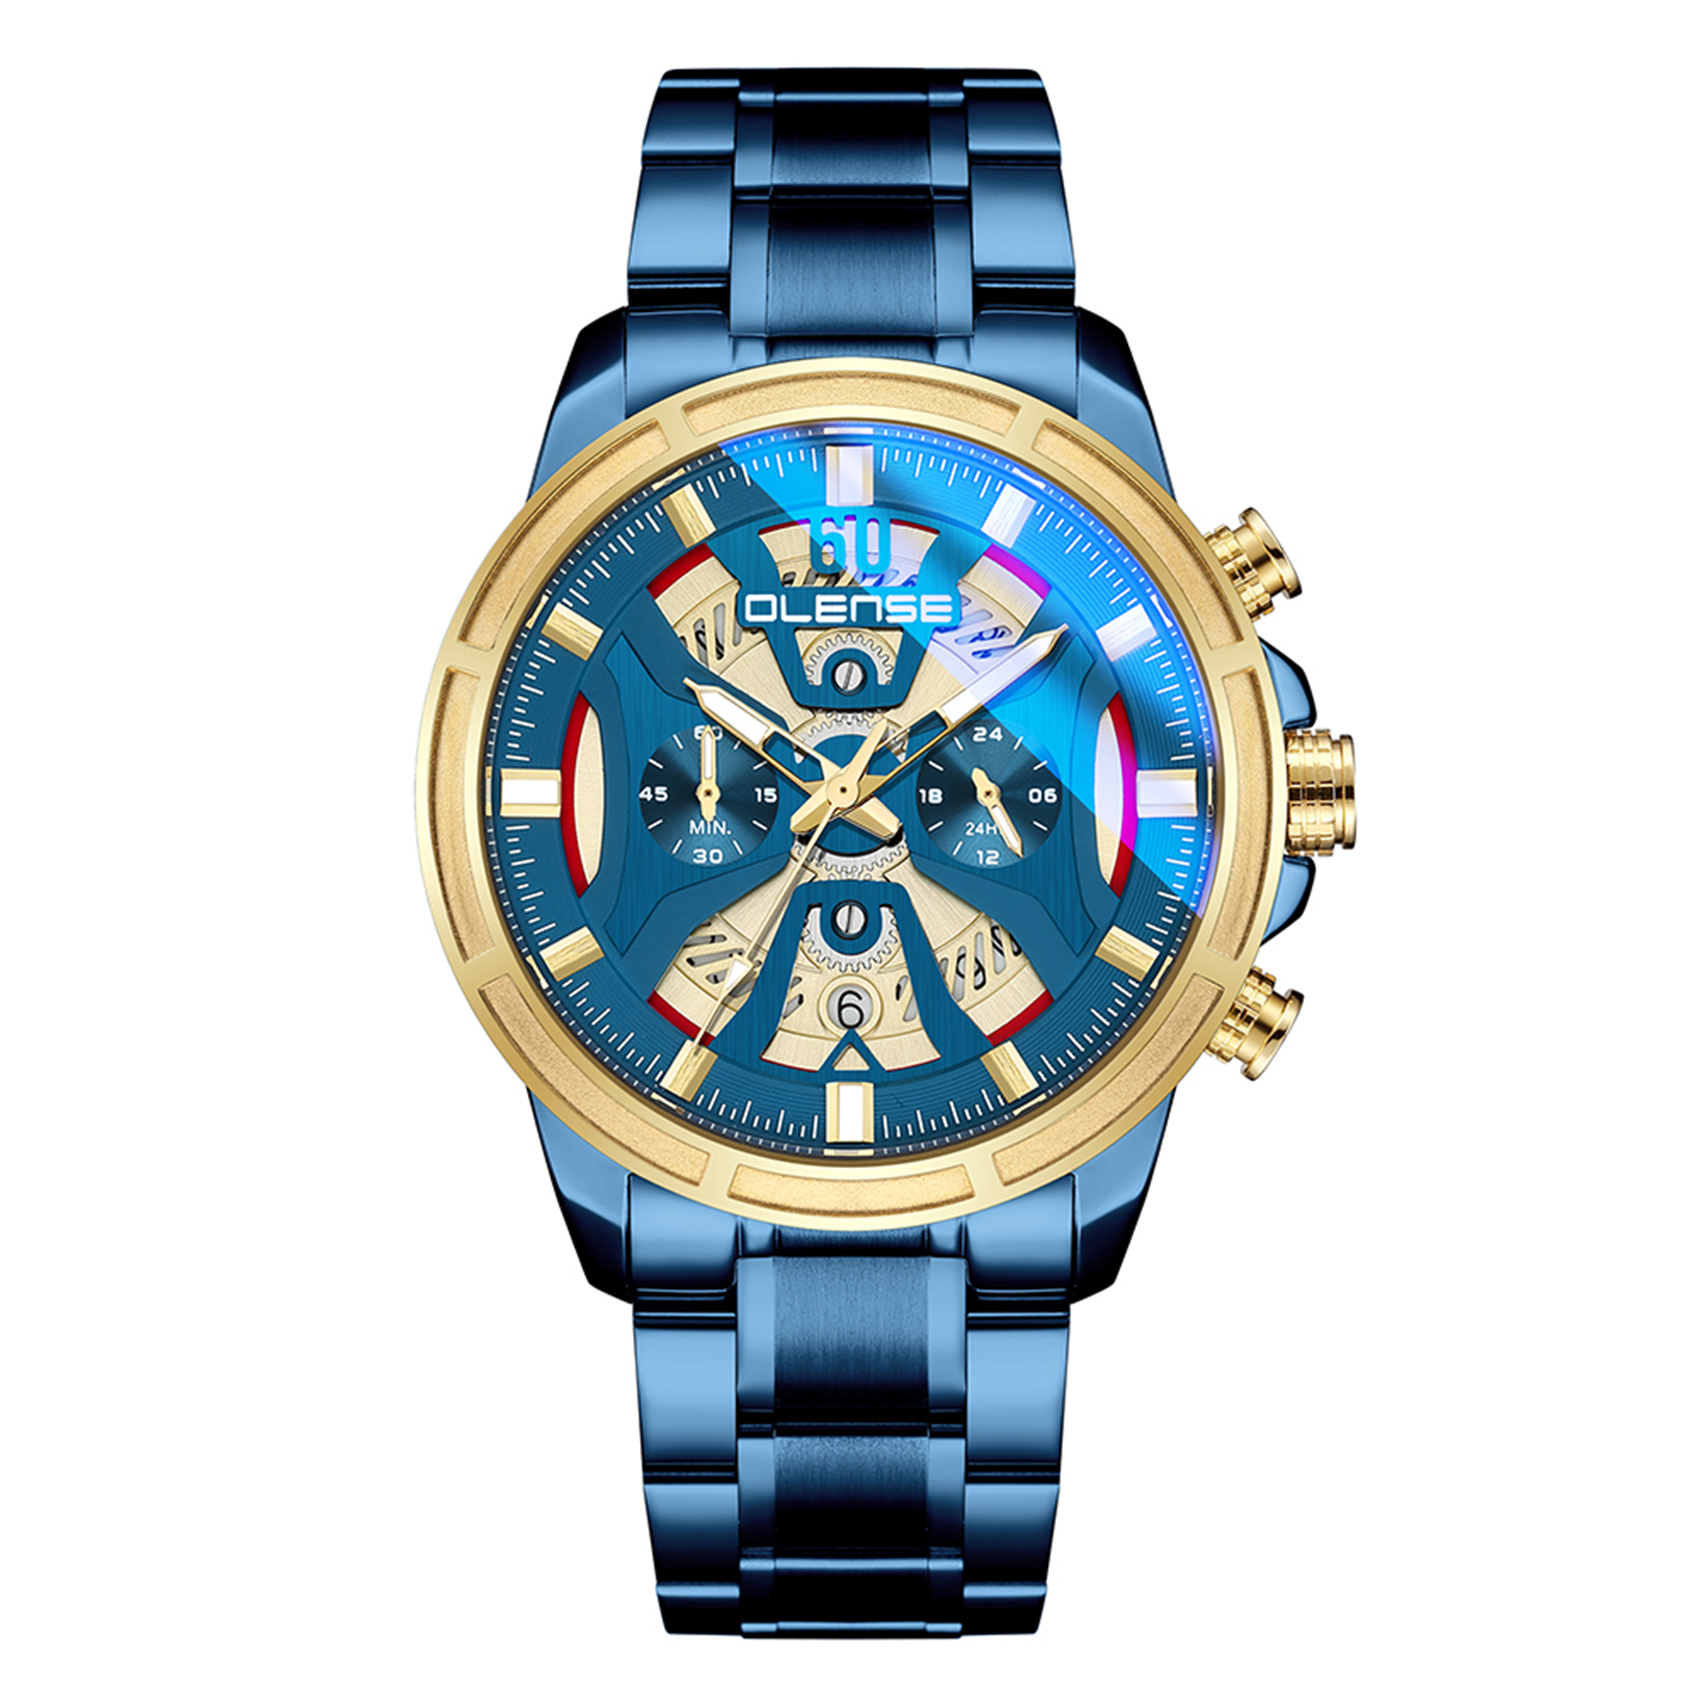 OLENSE - Luxury Watch for Men, Multi-functional, Quartz, Waterproof, 47mm, Blue & Gold